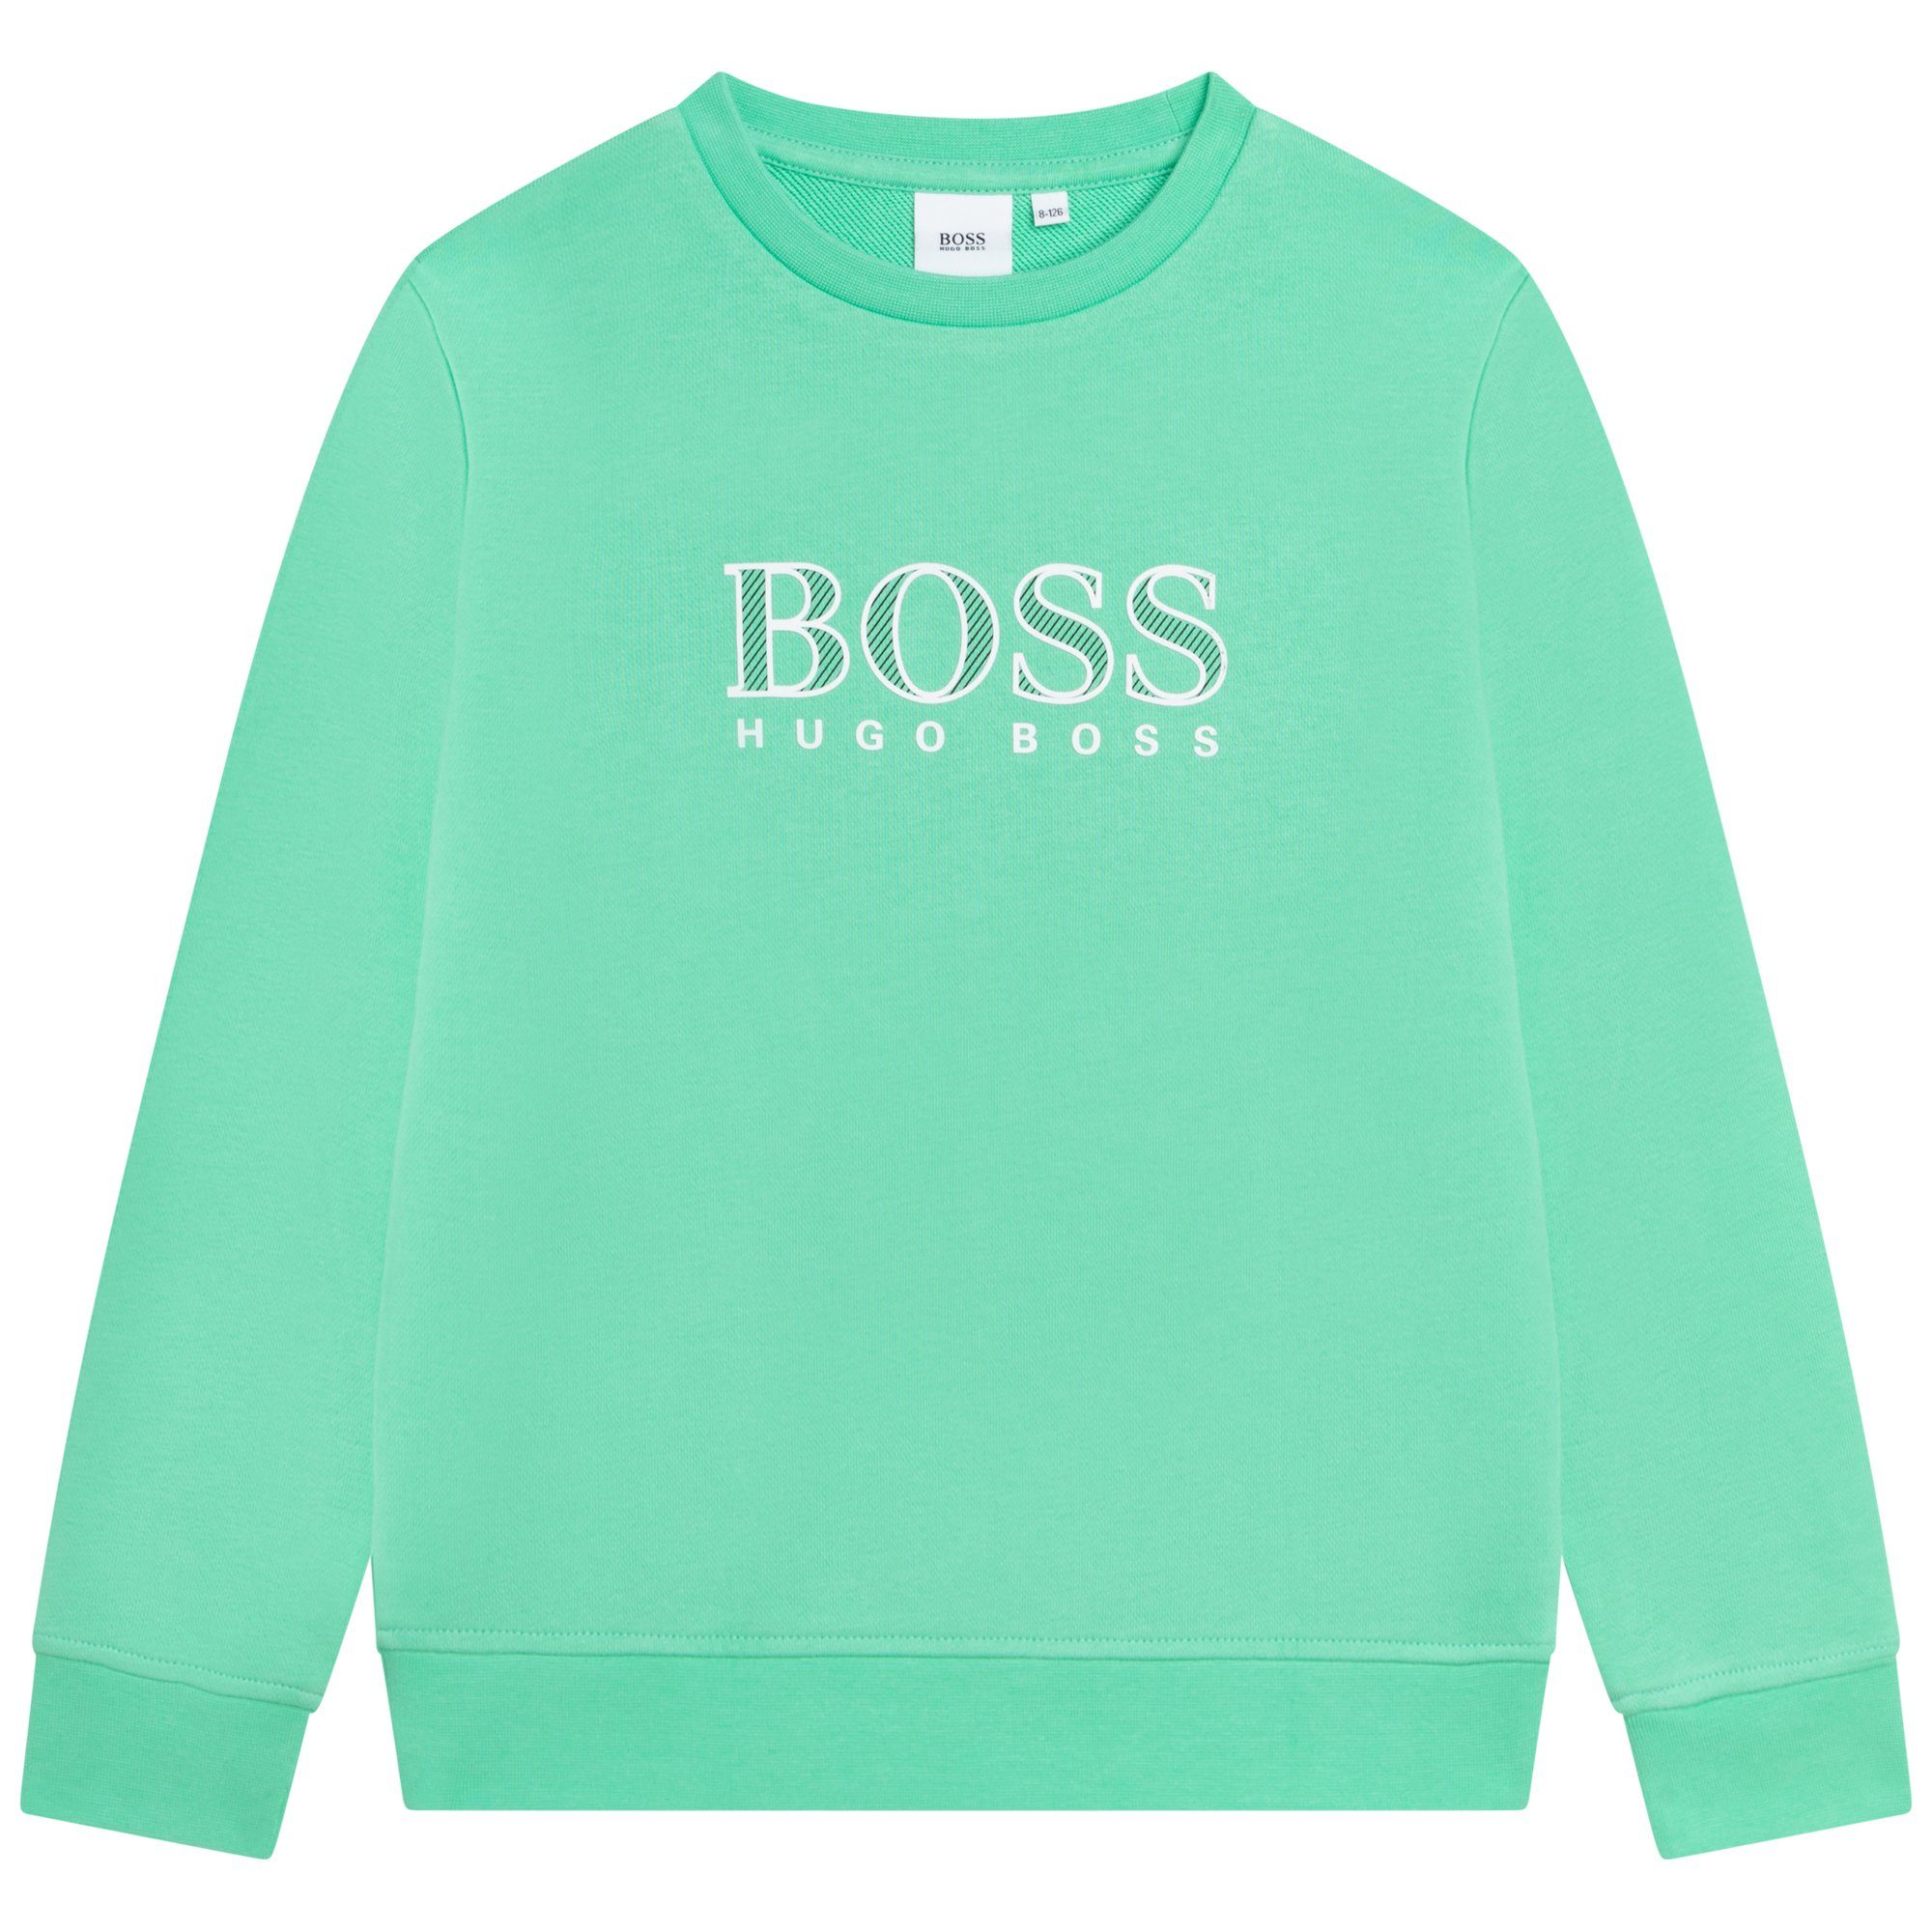 BOSS Sweatshirt Hugo Boss Kids Sweatshirt grün